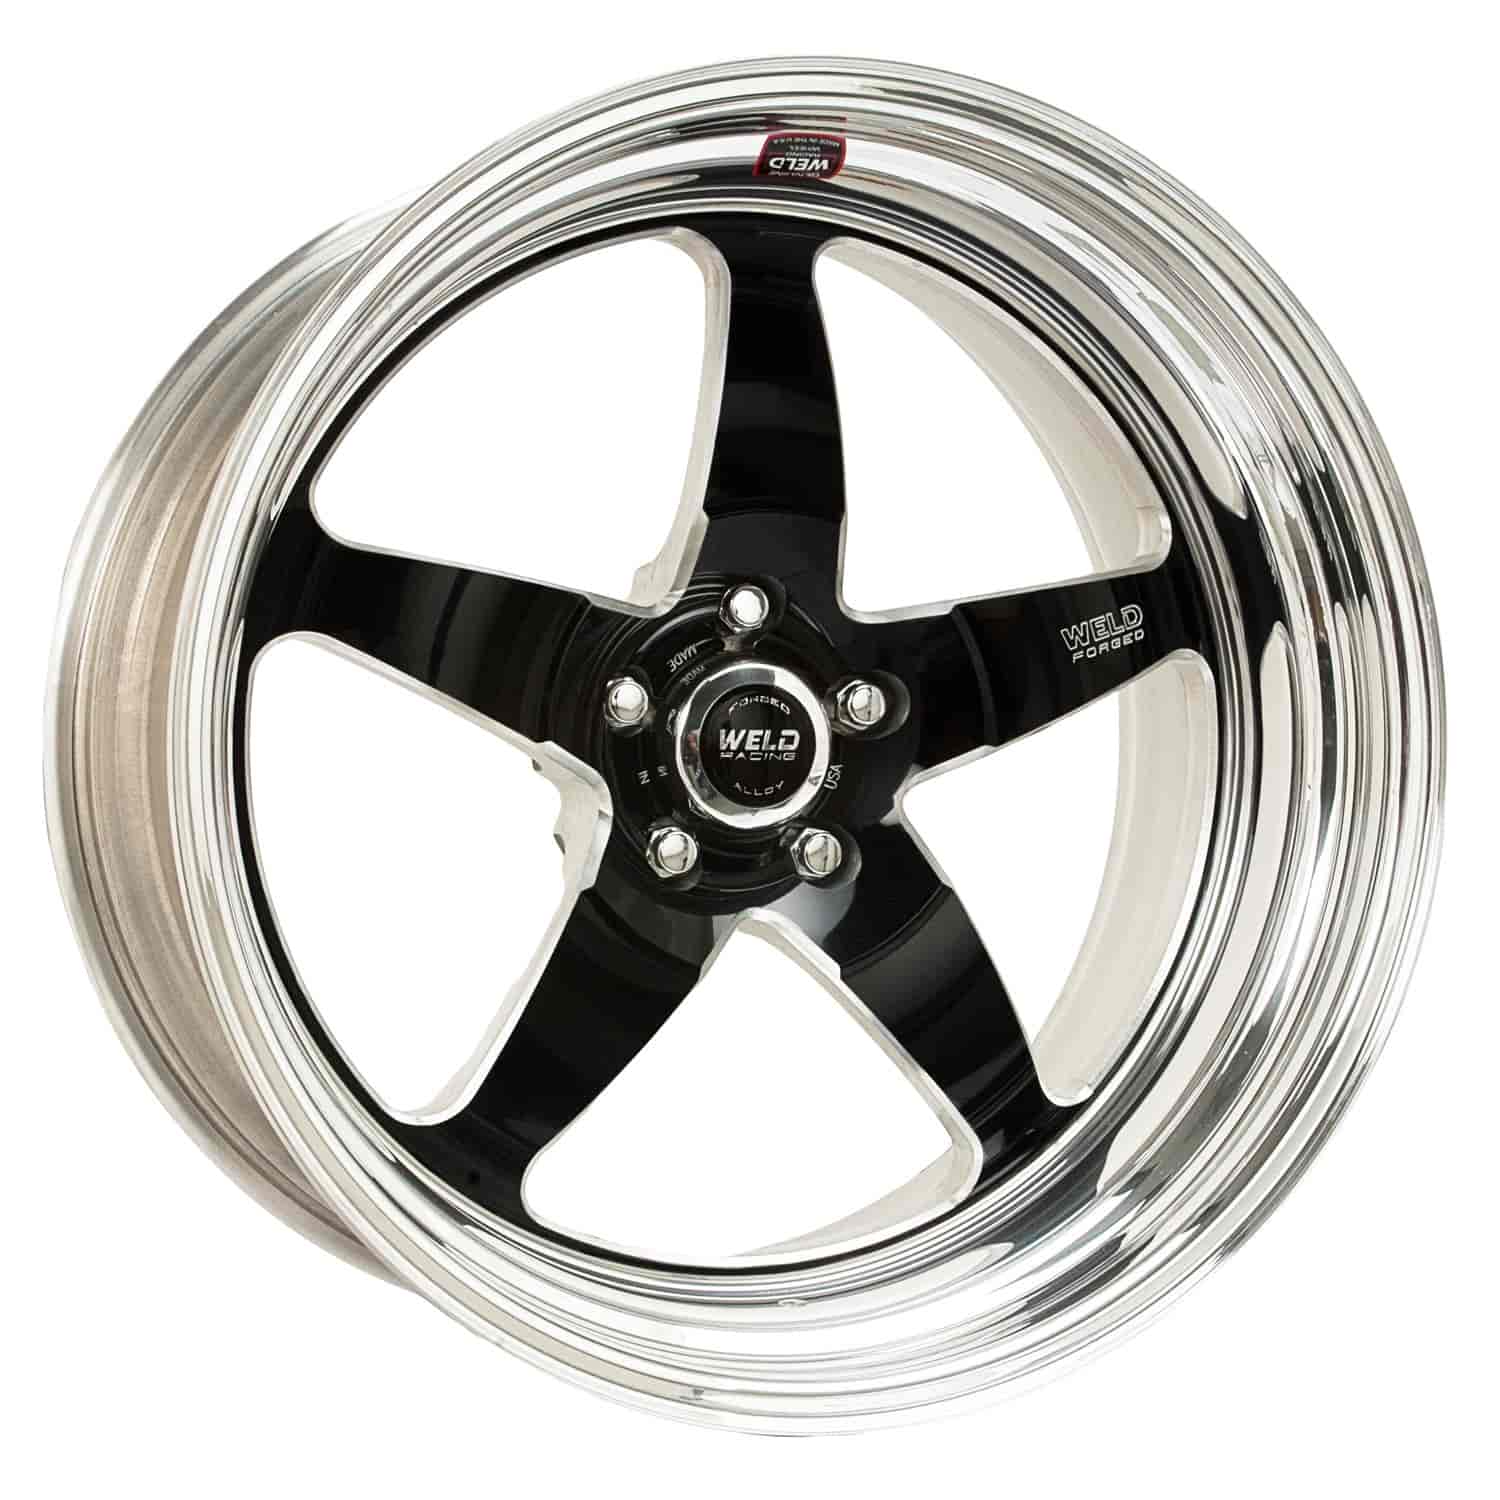 RT-S Series Wheel Size: 17" x 5" Bolt Circle: 5 x 4.5"